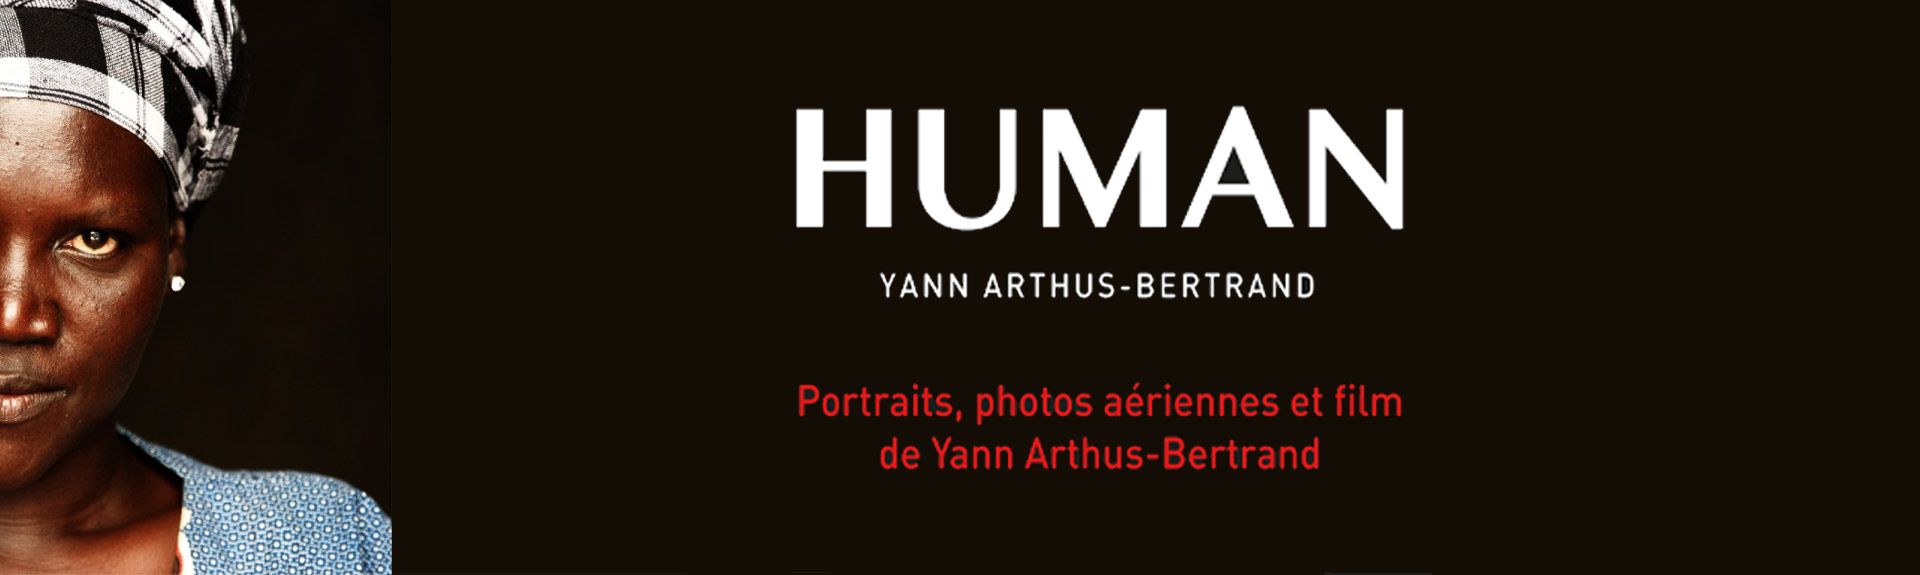 Exposition Human Yann Arthus Bertrand